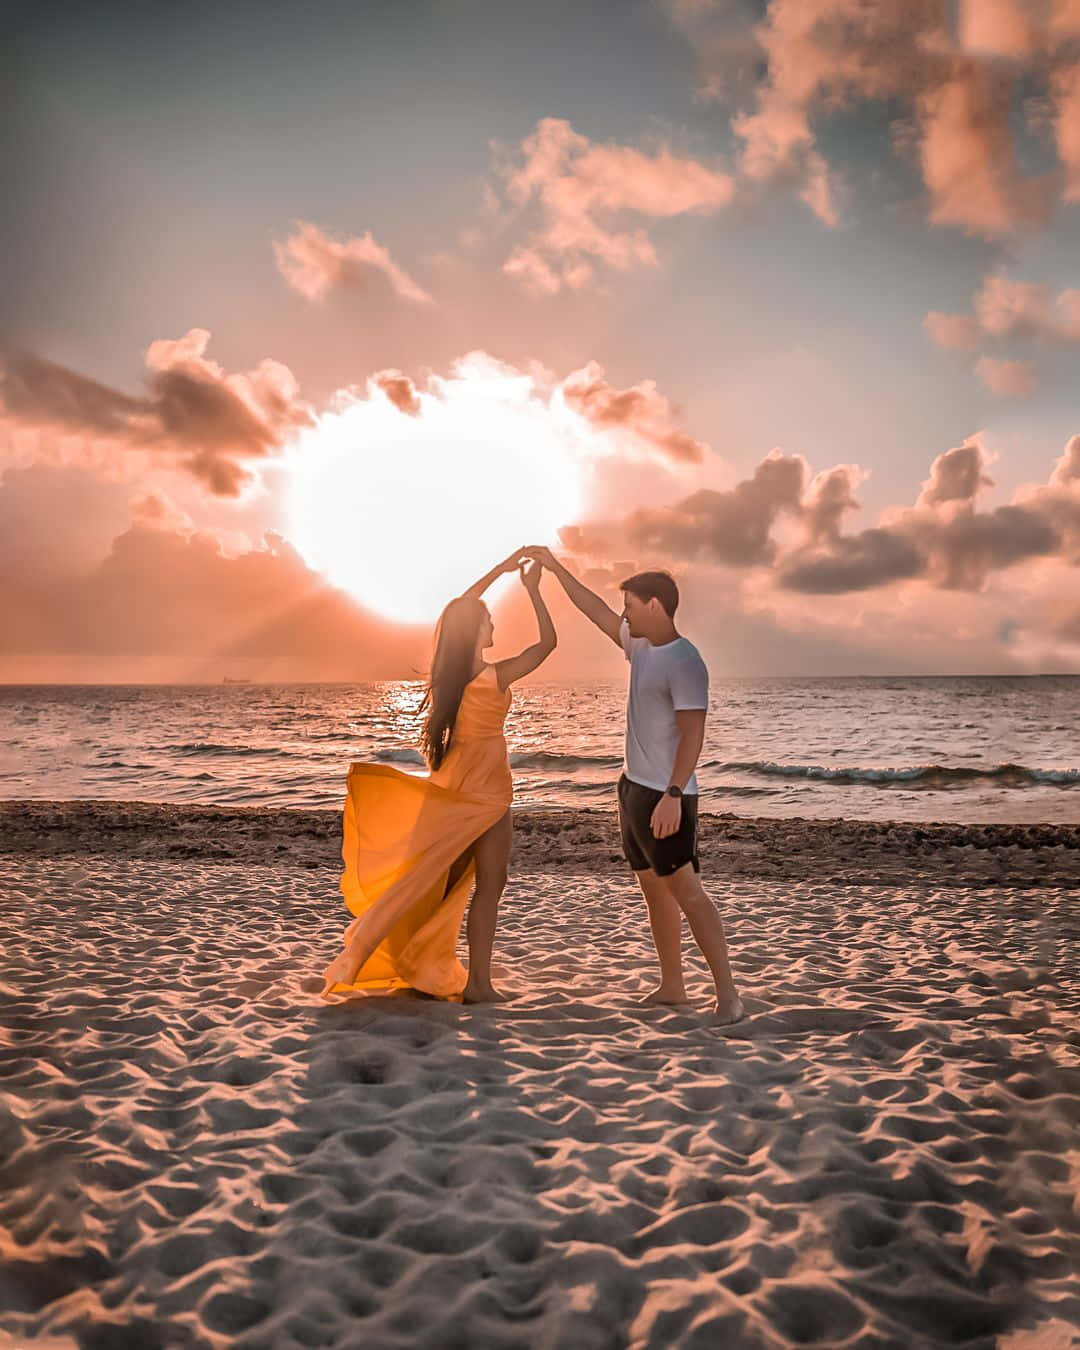 Couple Enjoying A Romantic Sunset Together